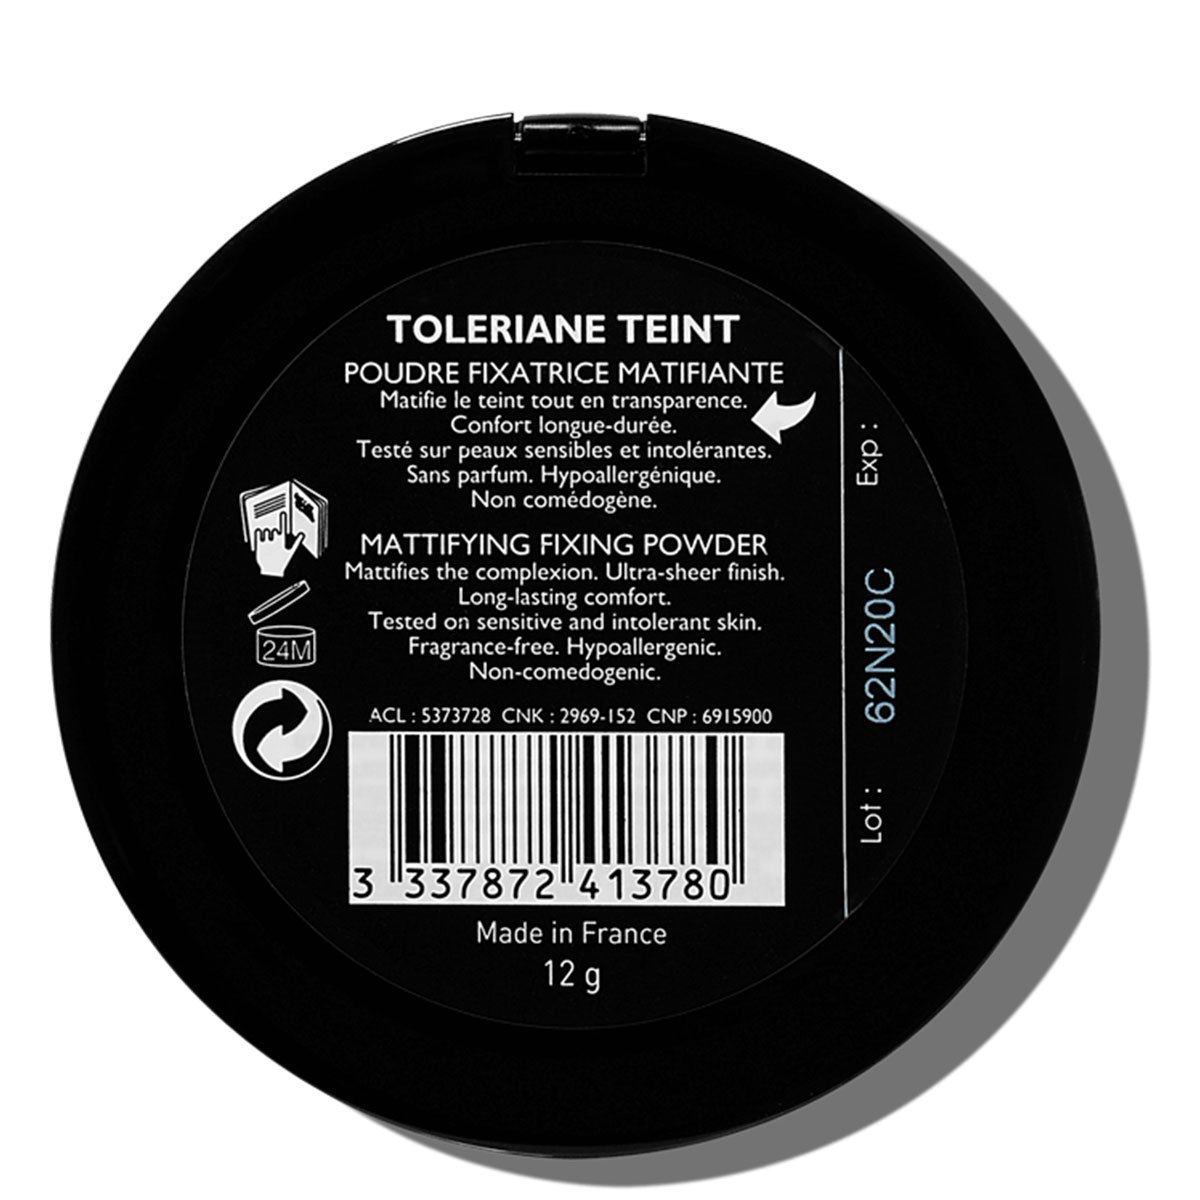 La Roche Posay Citlivá Toleriane Make-up PUDR Fixace 3337872413780